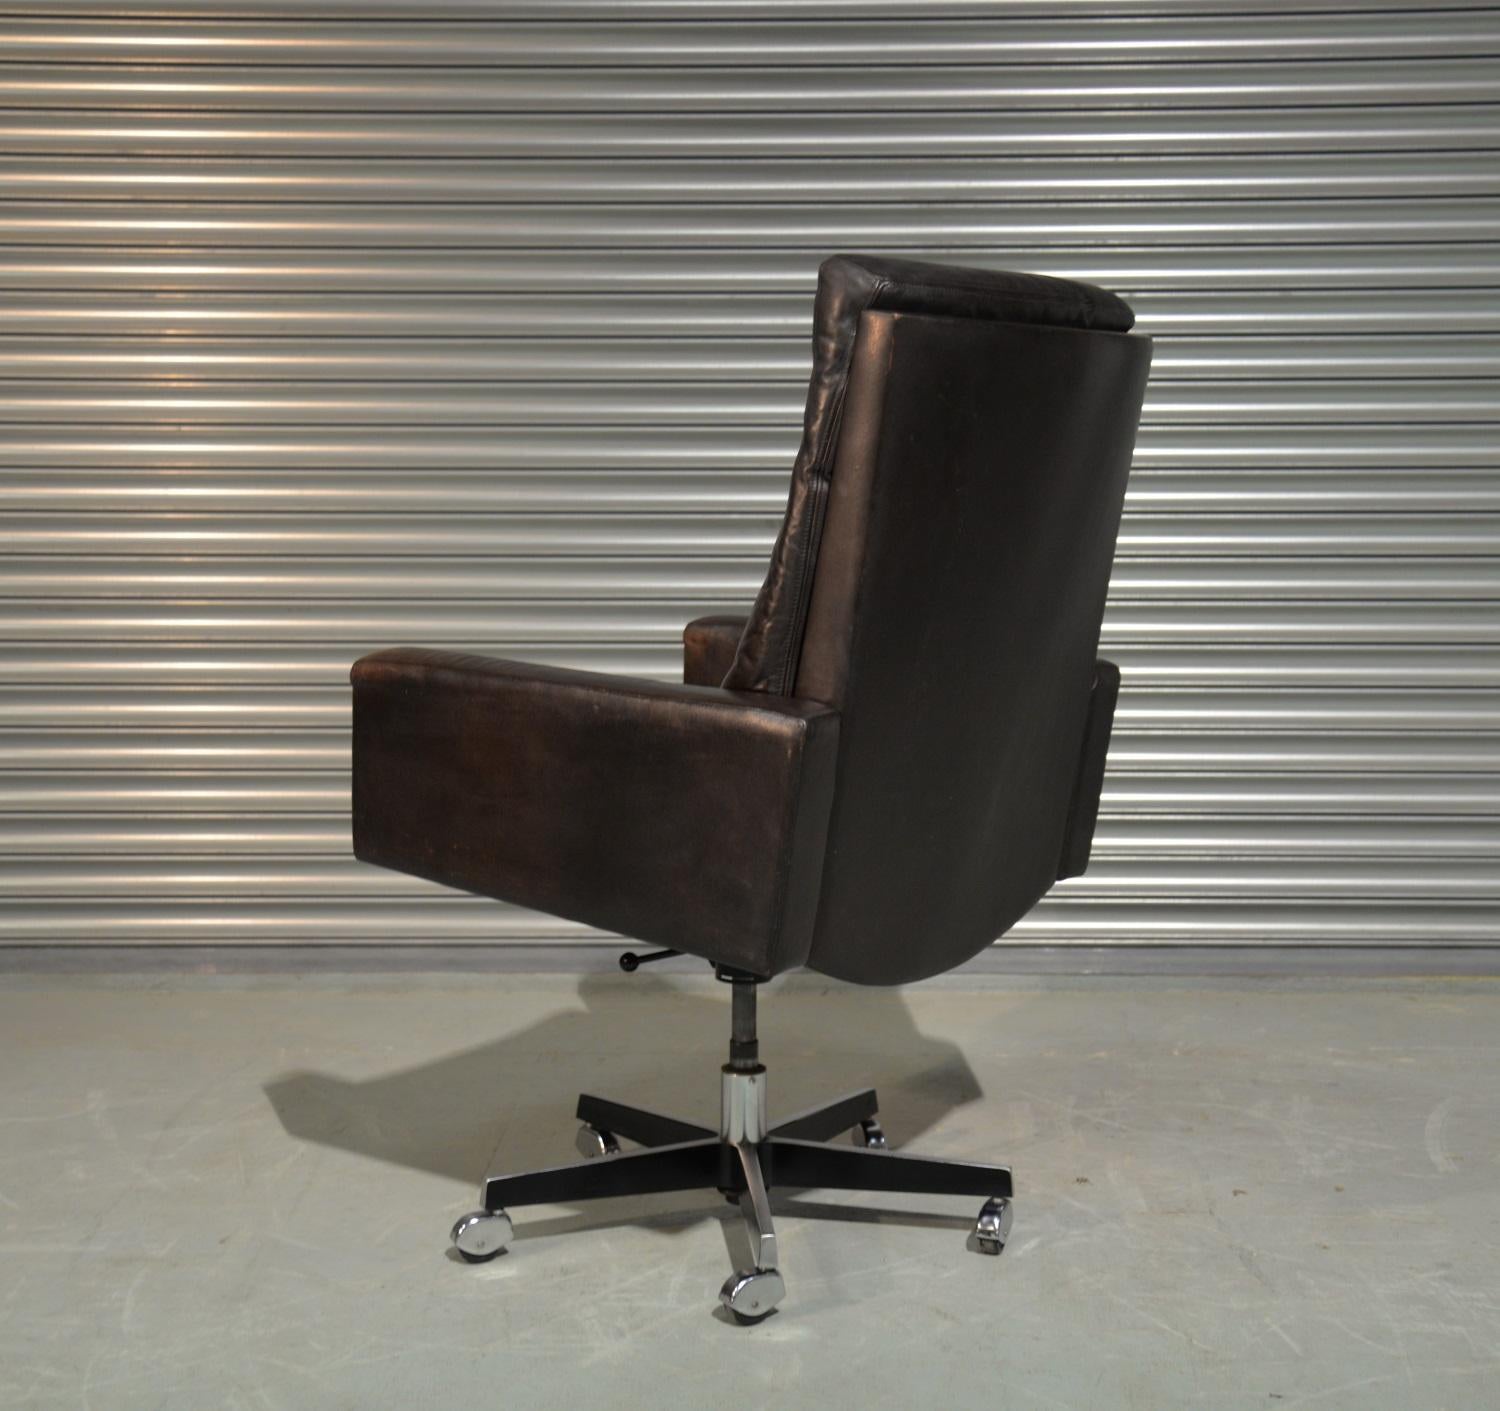 20th Century  De Sede RH201 Executive Swivel armchair by Robert Haussmann, Switzerland 1957